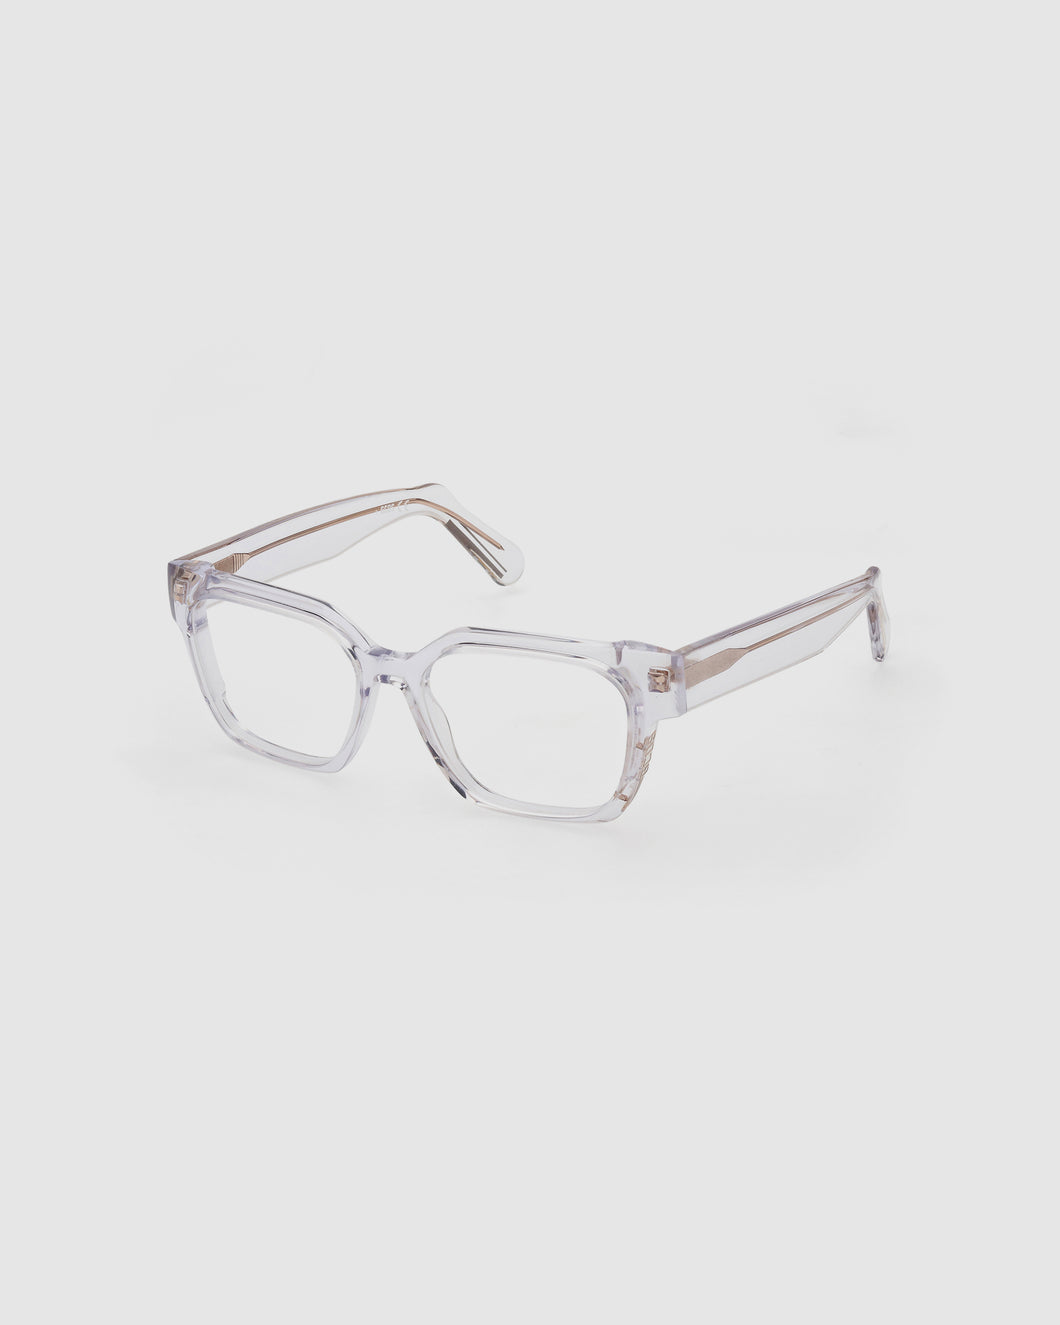 GD5013 Squared eyeglasses : Unisex Sunglasses Transparent  | GCDS